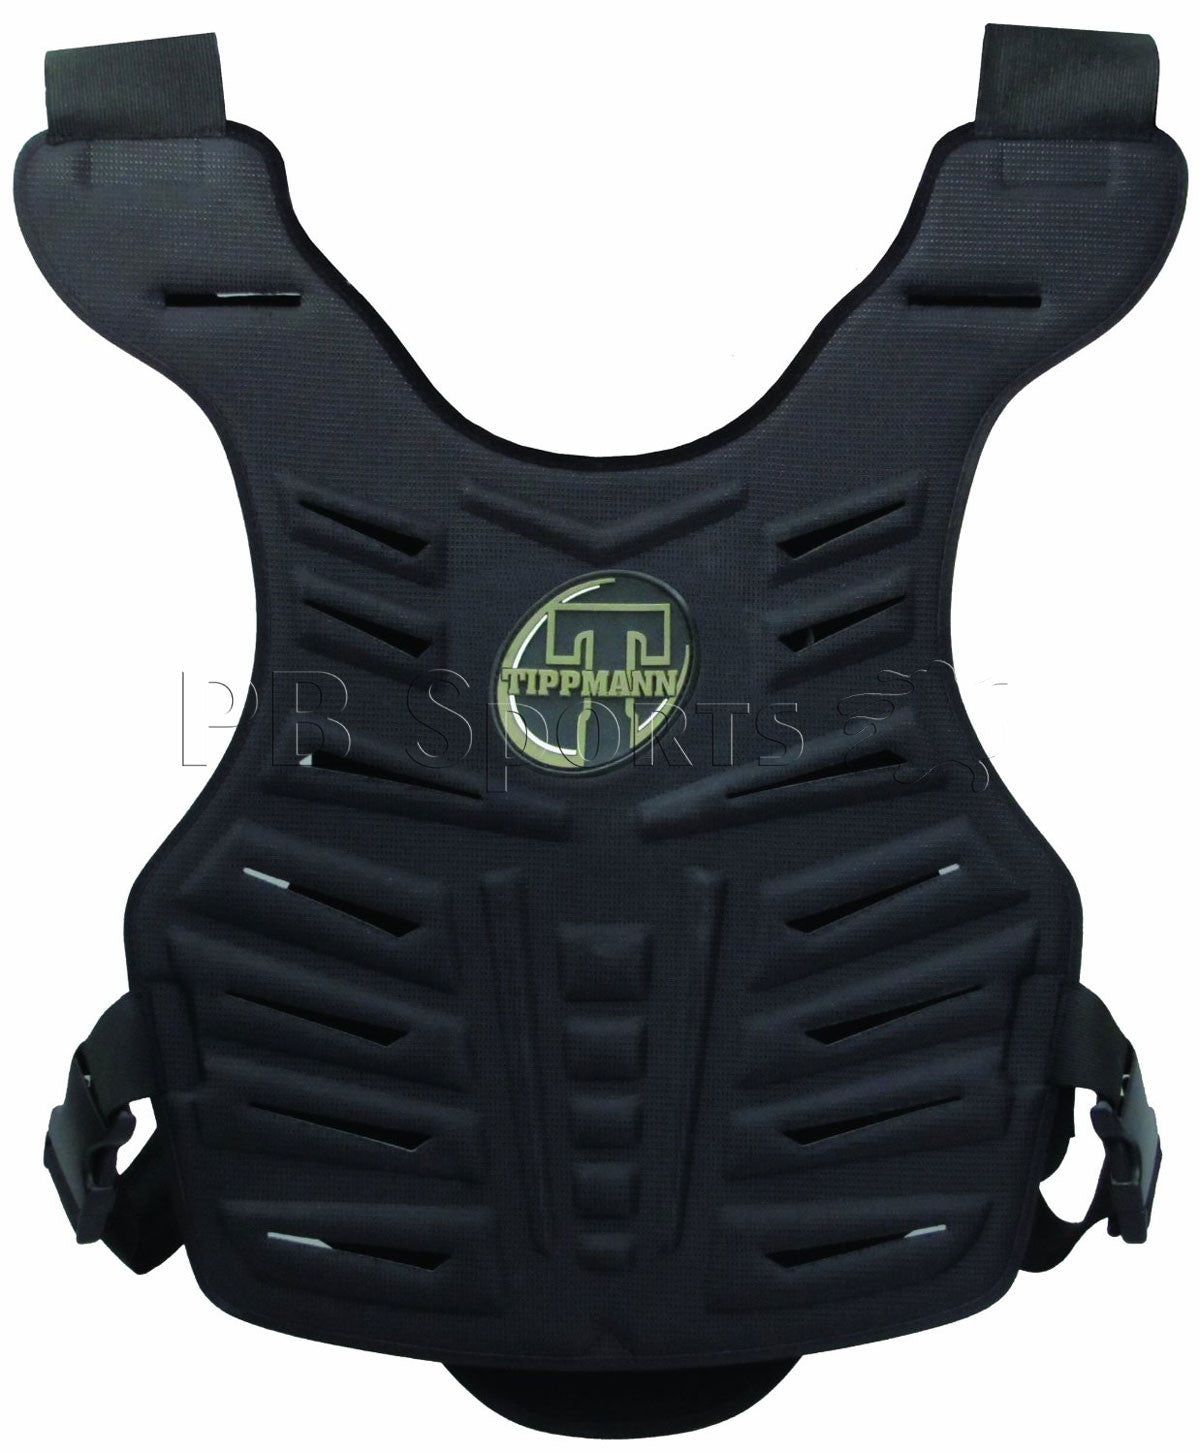 Tippmann Body Armor Chest Protector - Black - Tippmann Sports